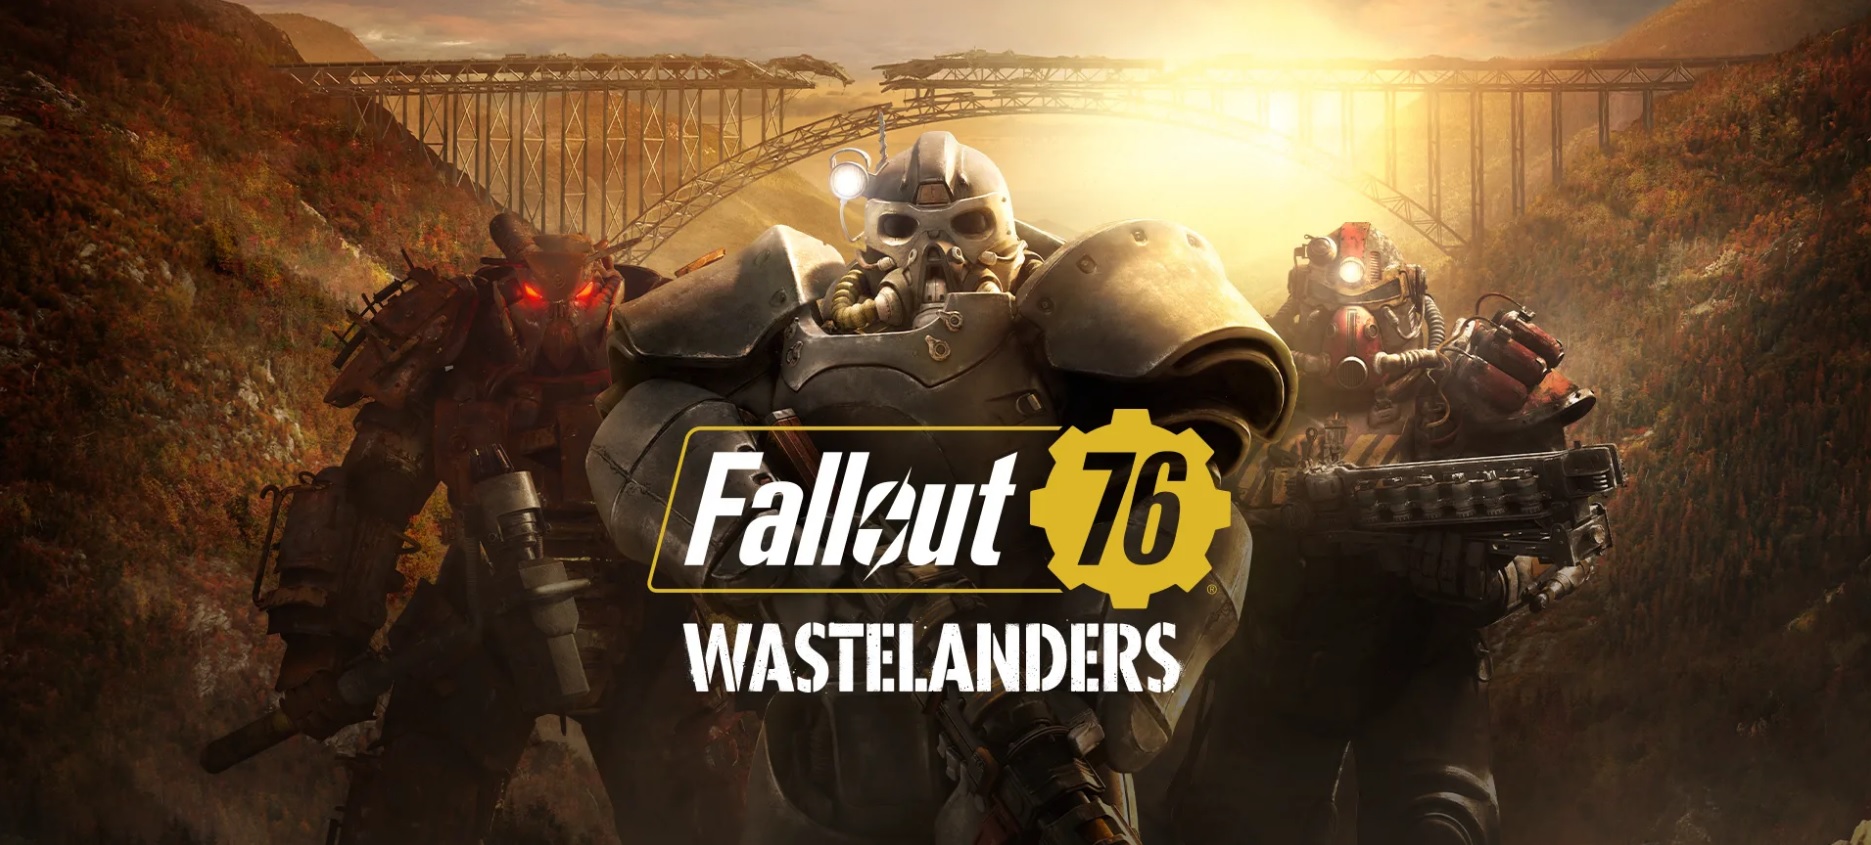 Fallout 76: Wastelanders já está disponível